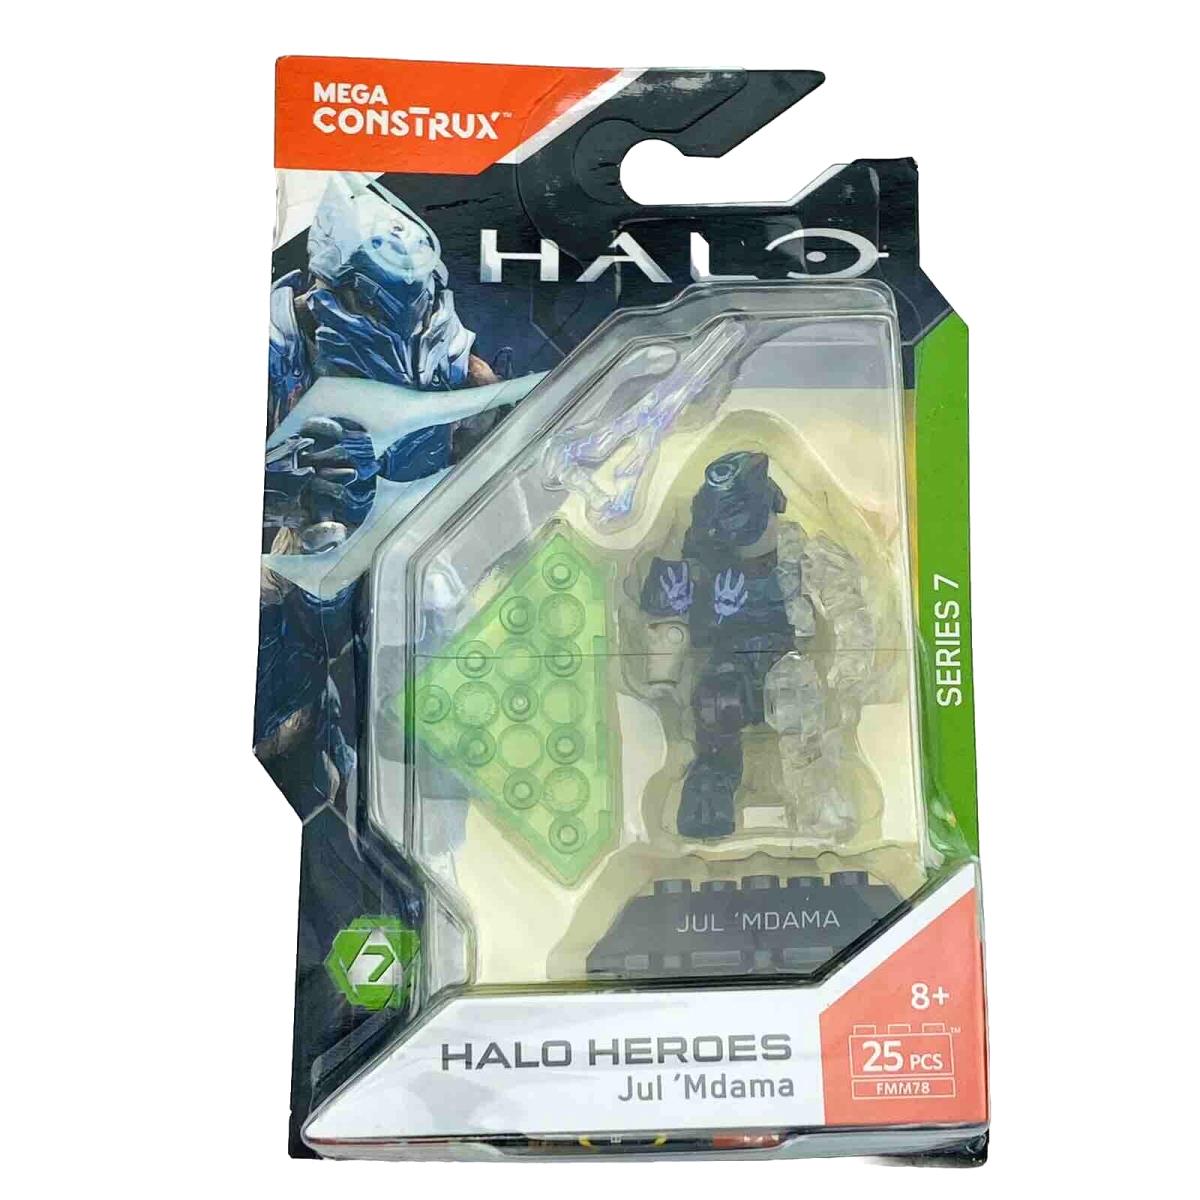 Halo Heroes 7 Mega Construx Jul `mdama Mini Figure FMM78